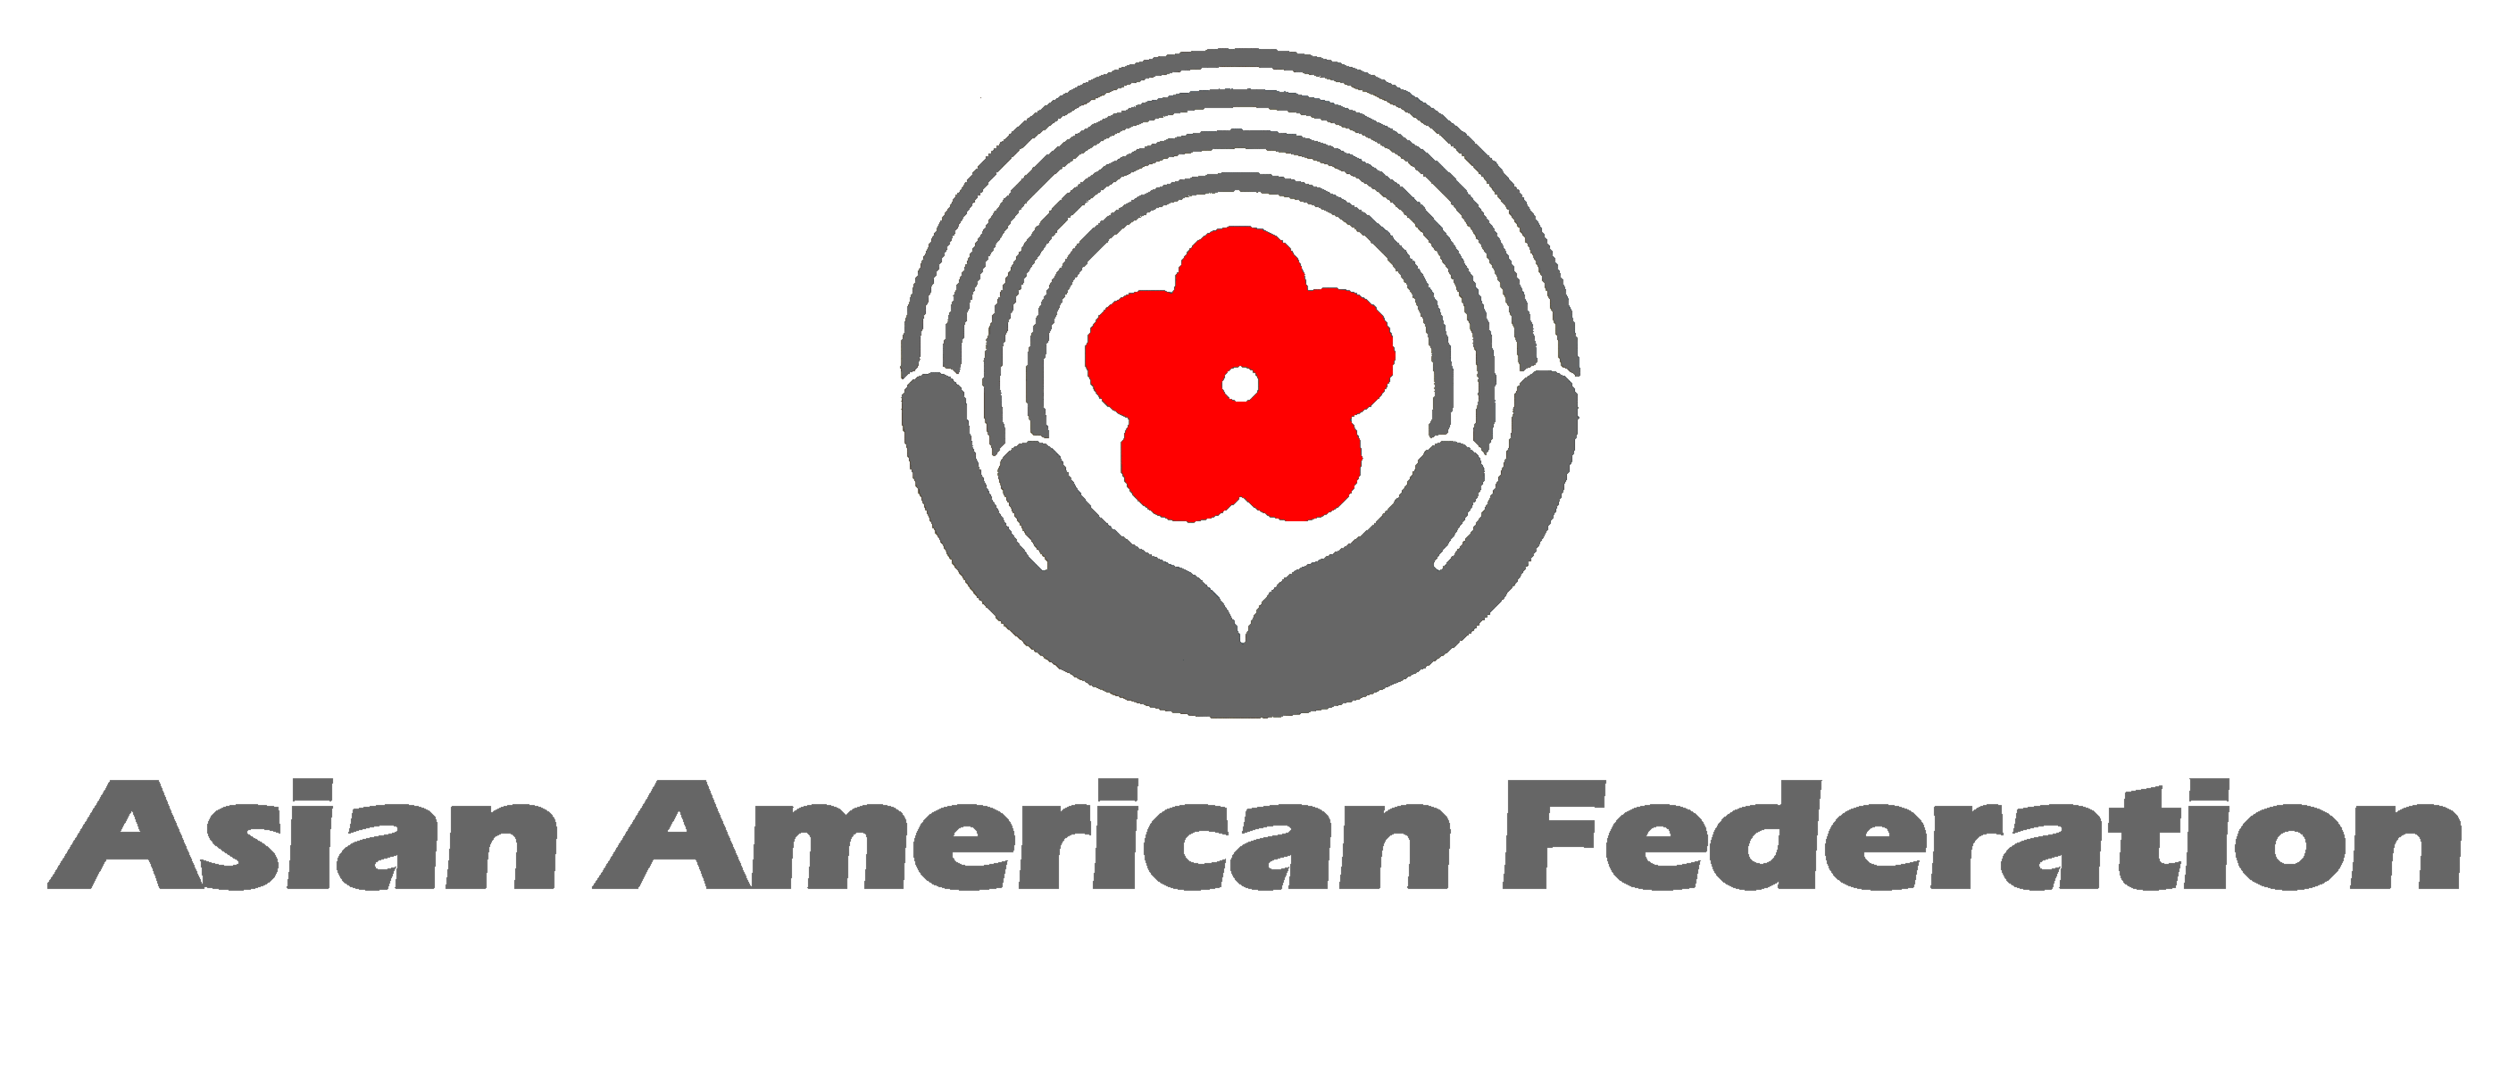 Asian American Federation Logo.png